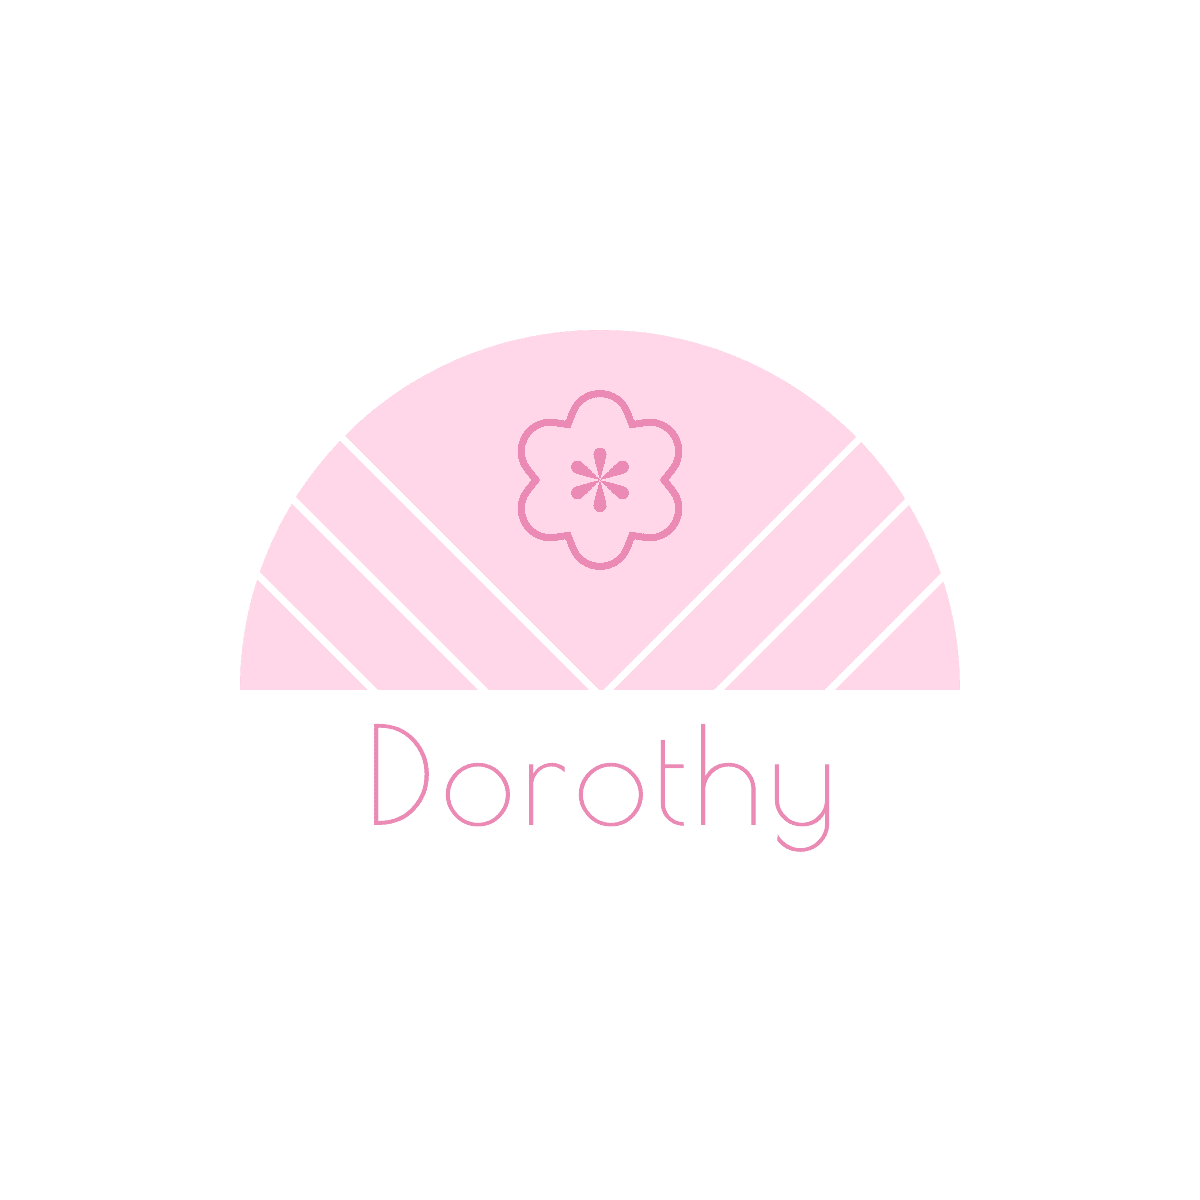 Dorothy LLC., - Introducing Japanese Femtech